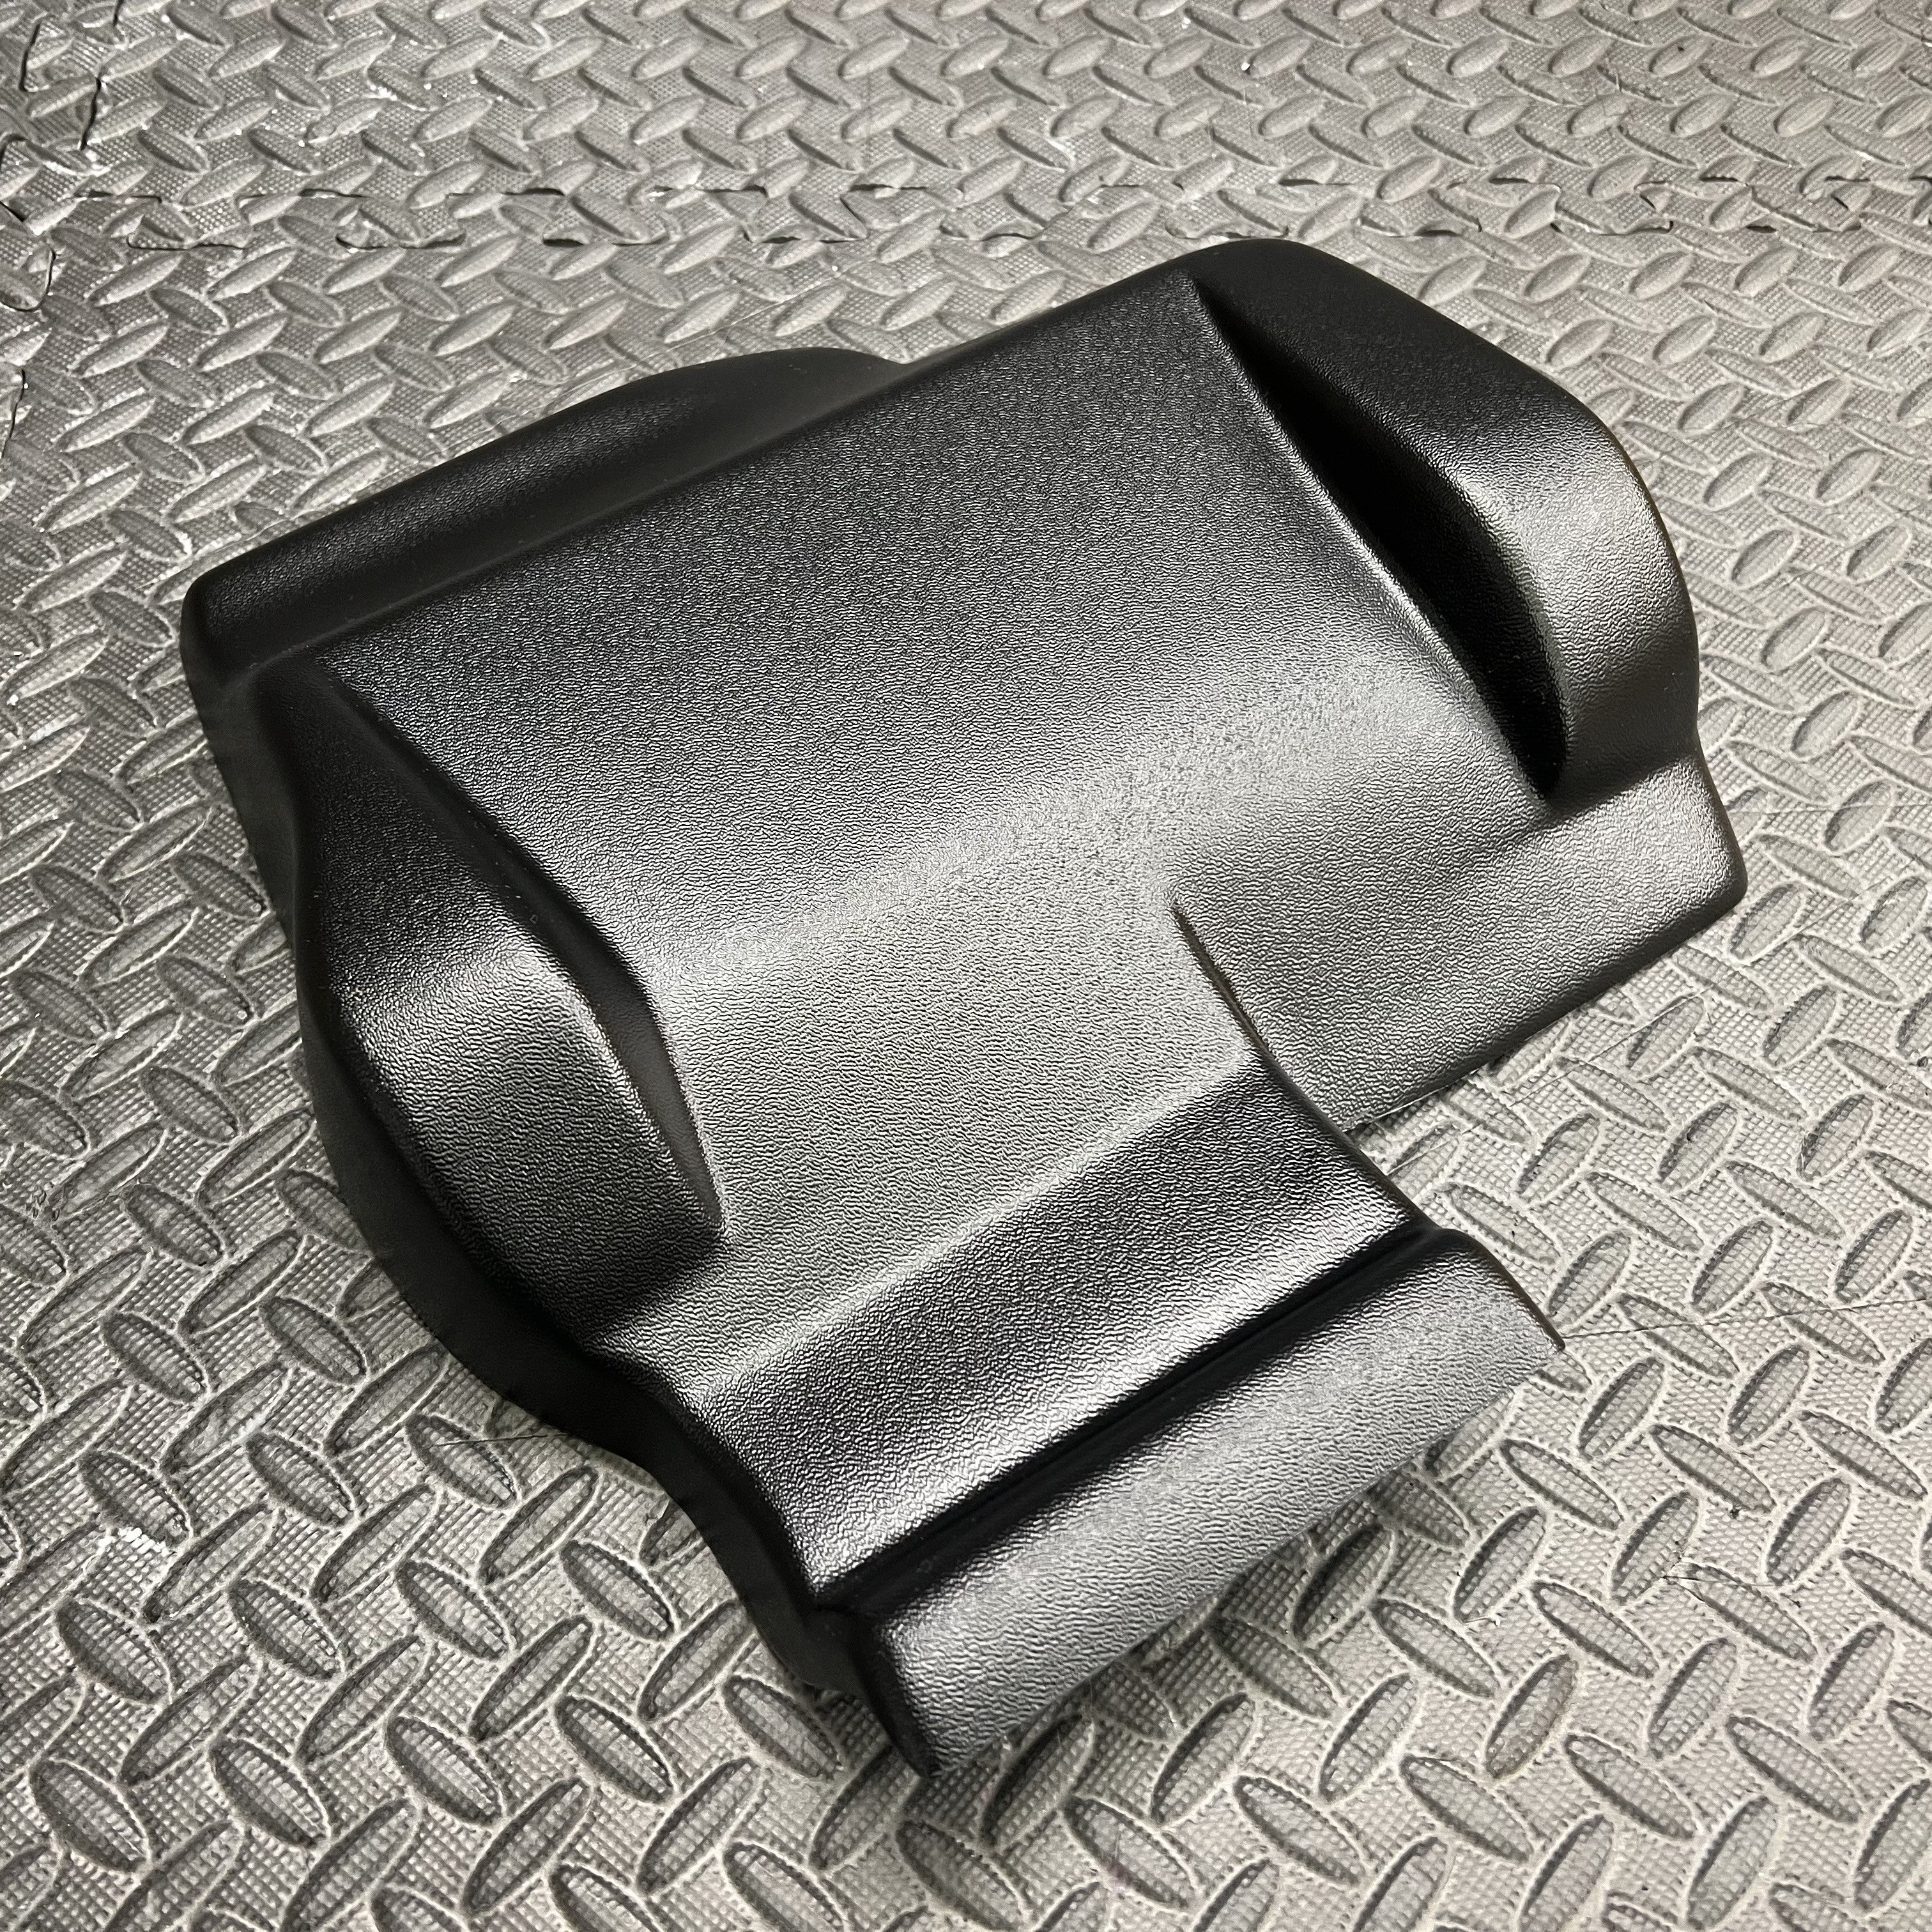 Proform Airbox Cover - Mazda MX5/Miata Mk3/3.5/NC (Plastic Finishes)